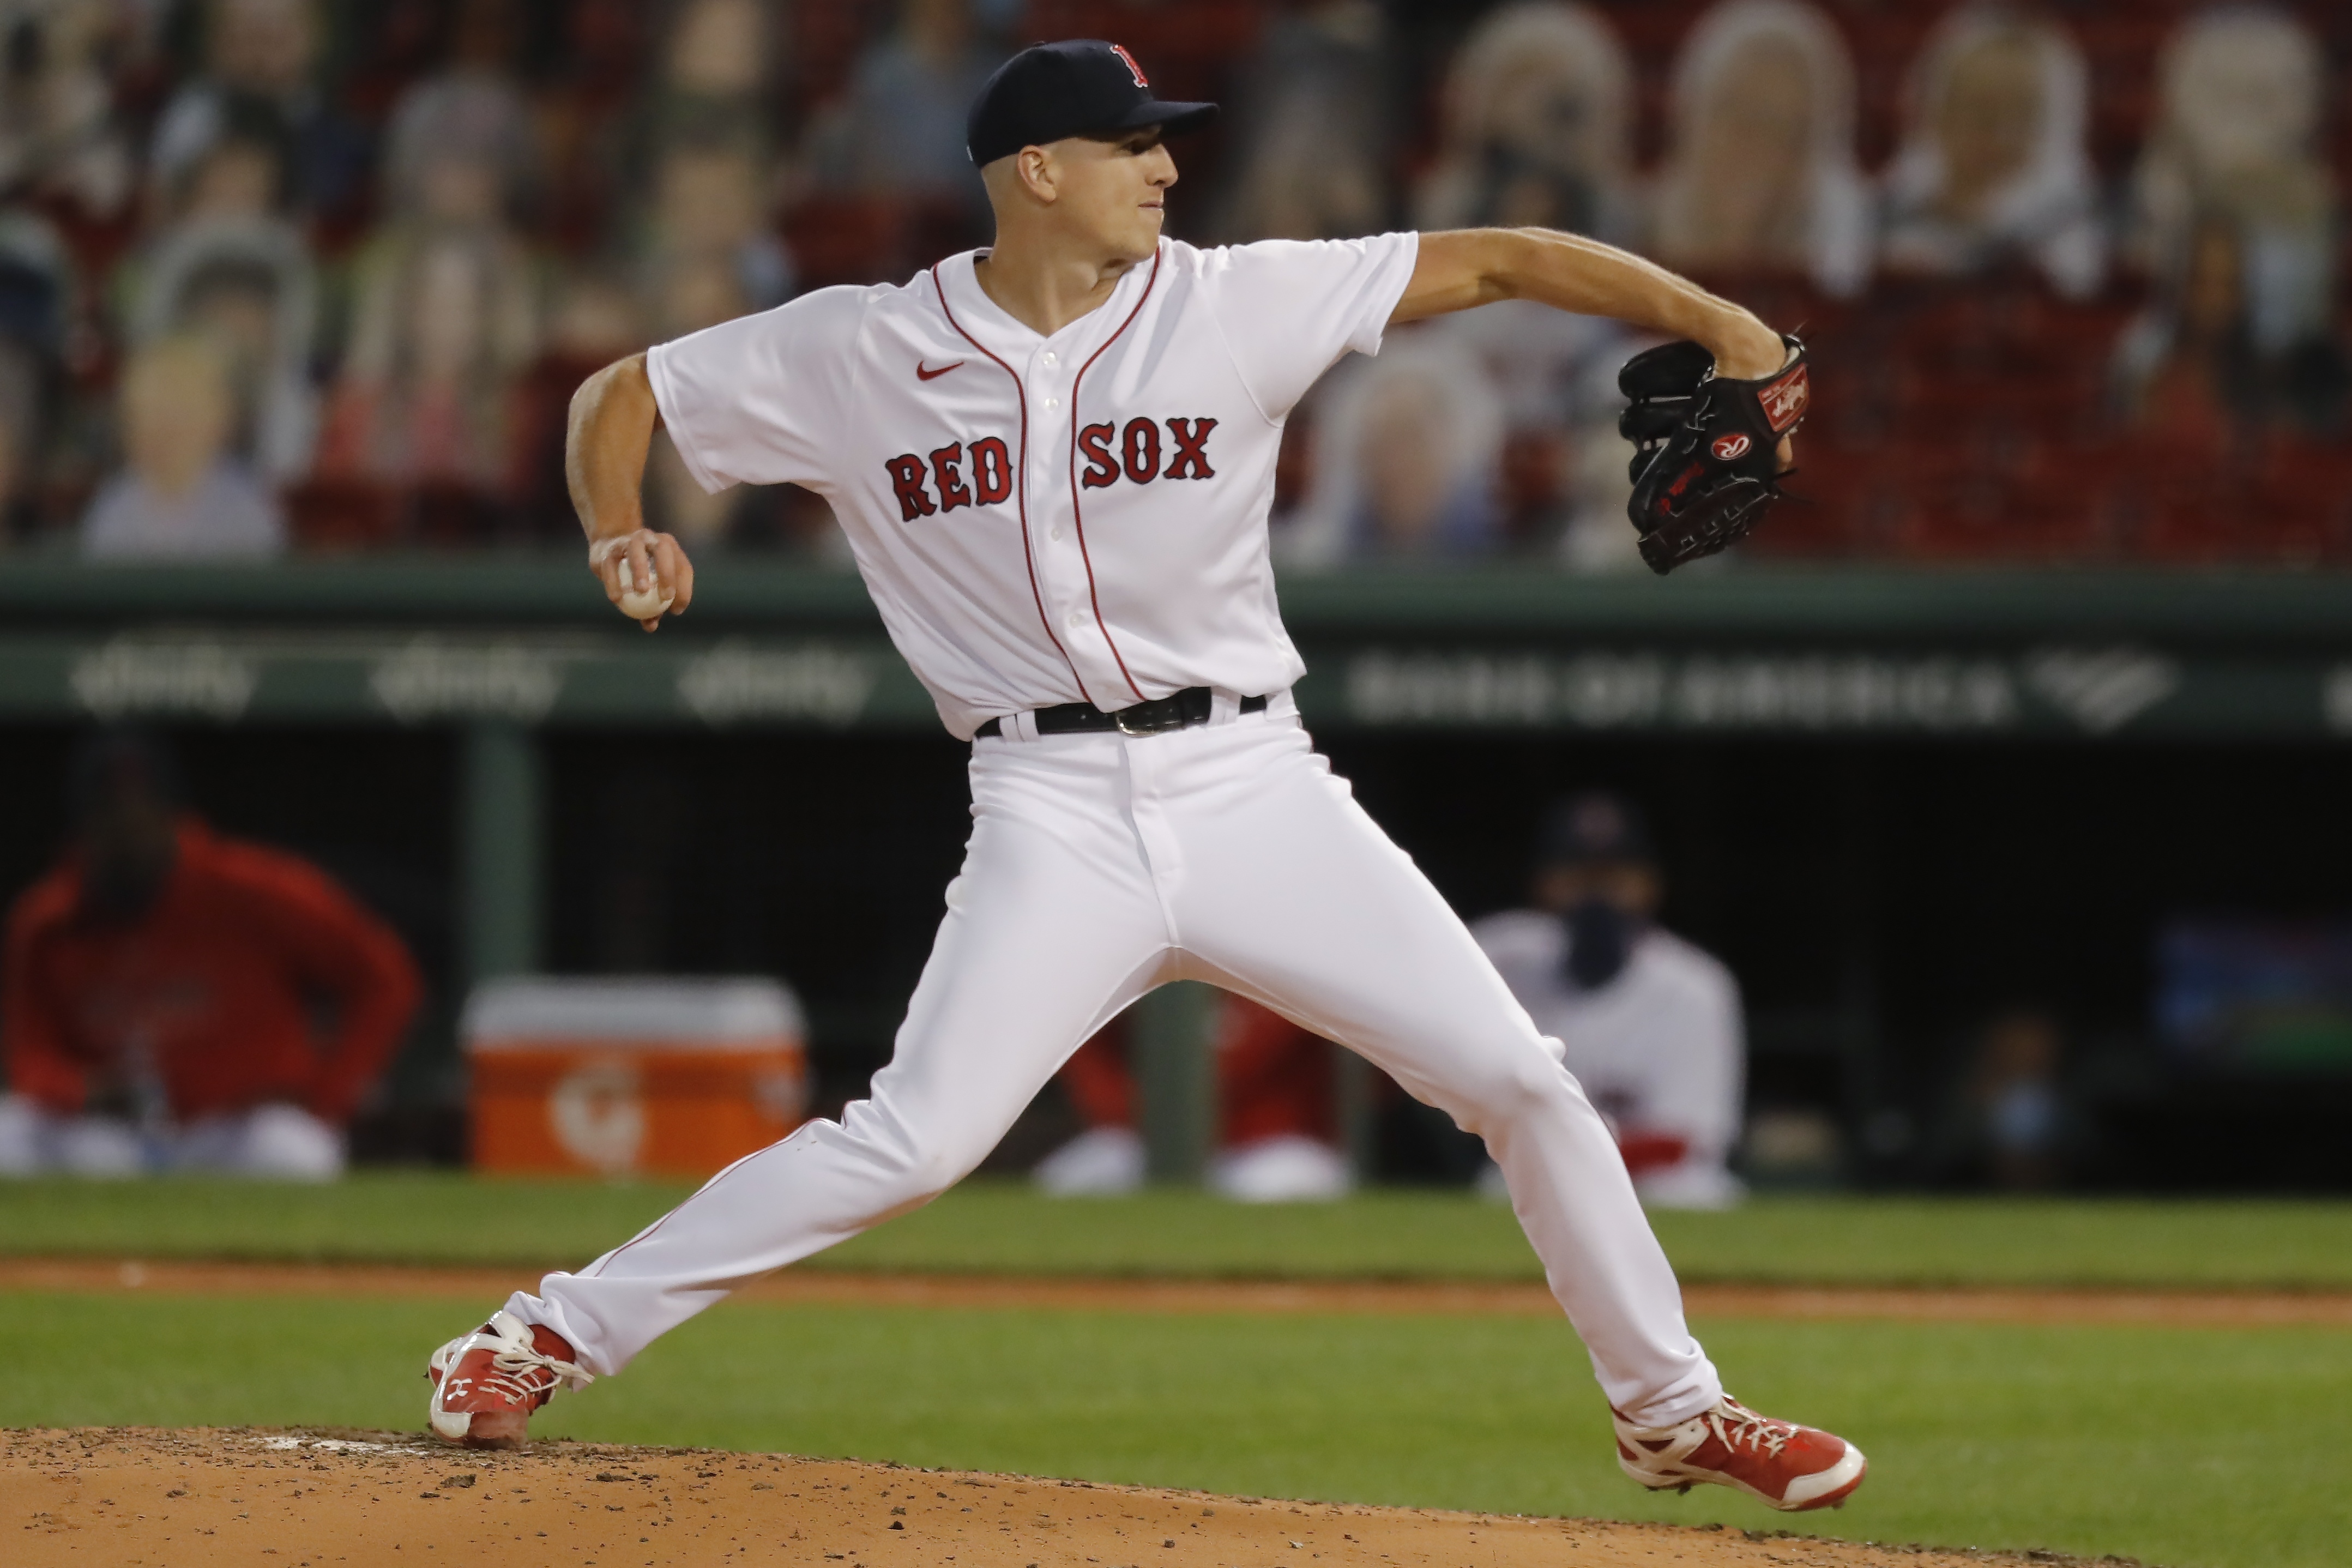 Nick Pivetta - MLB Starting pitcher - News, Stats, Bio and more